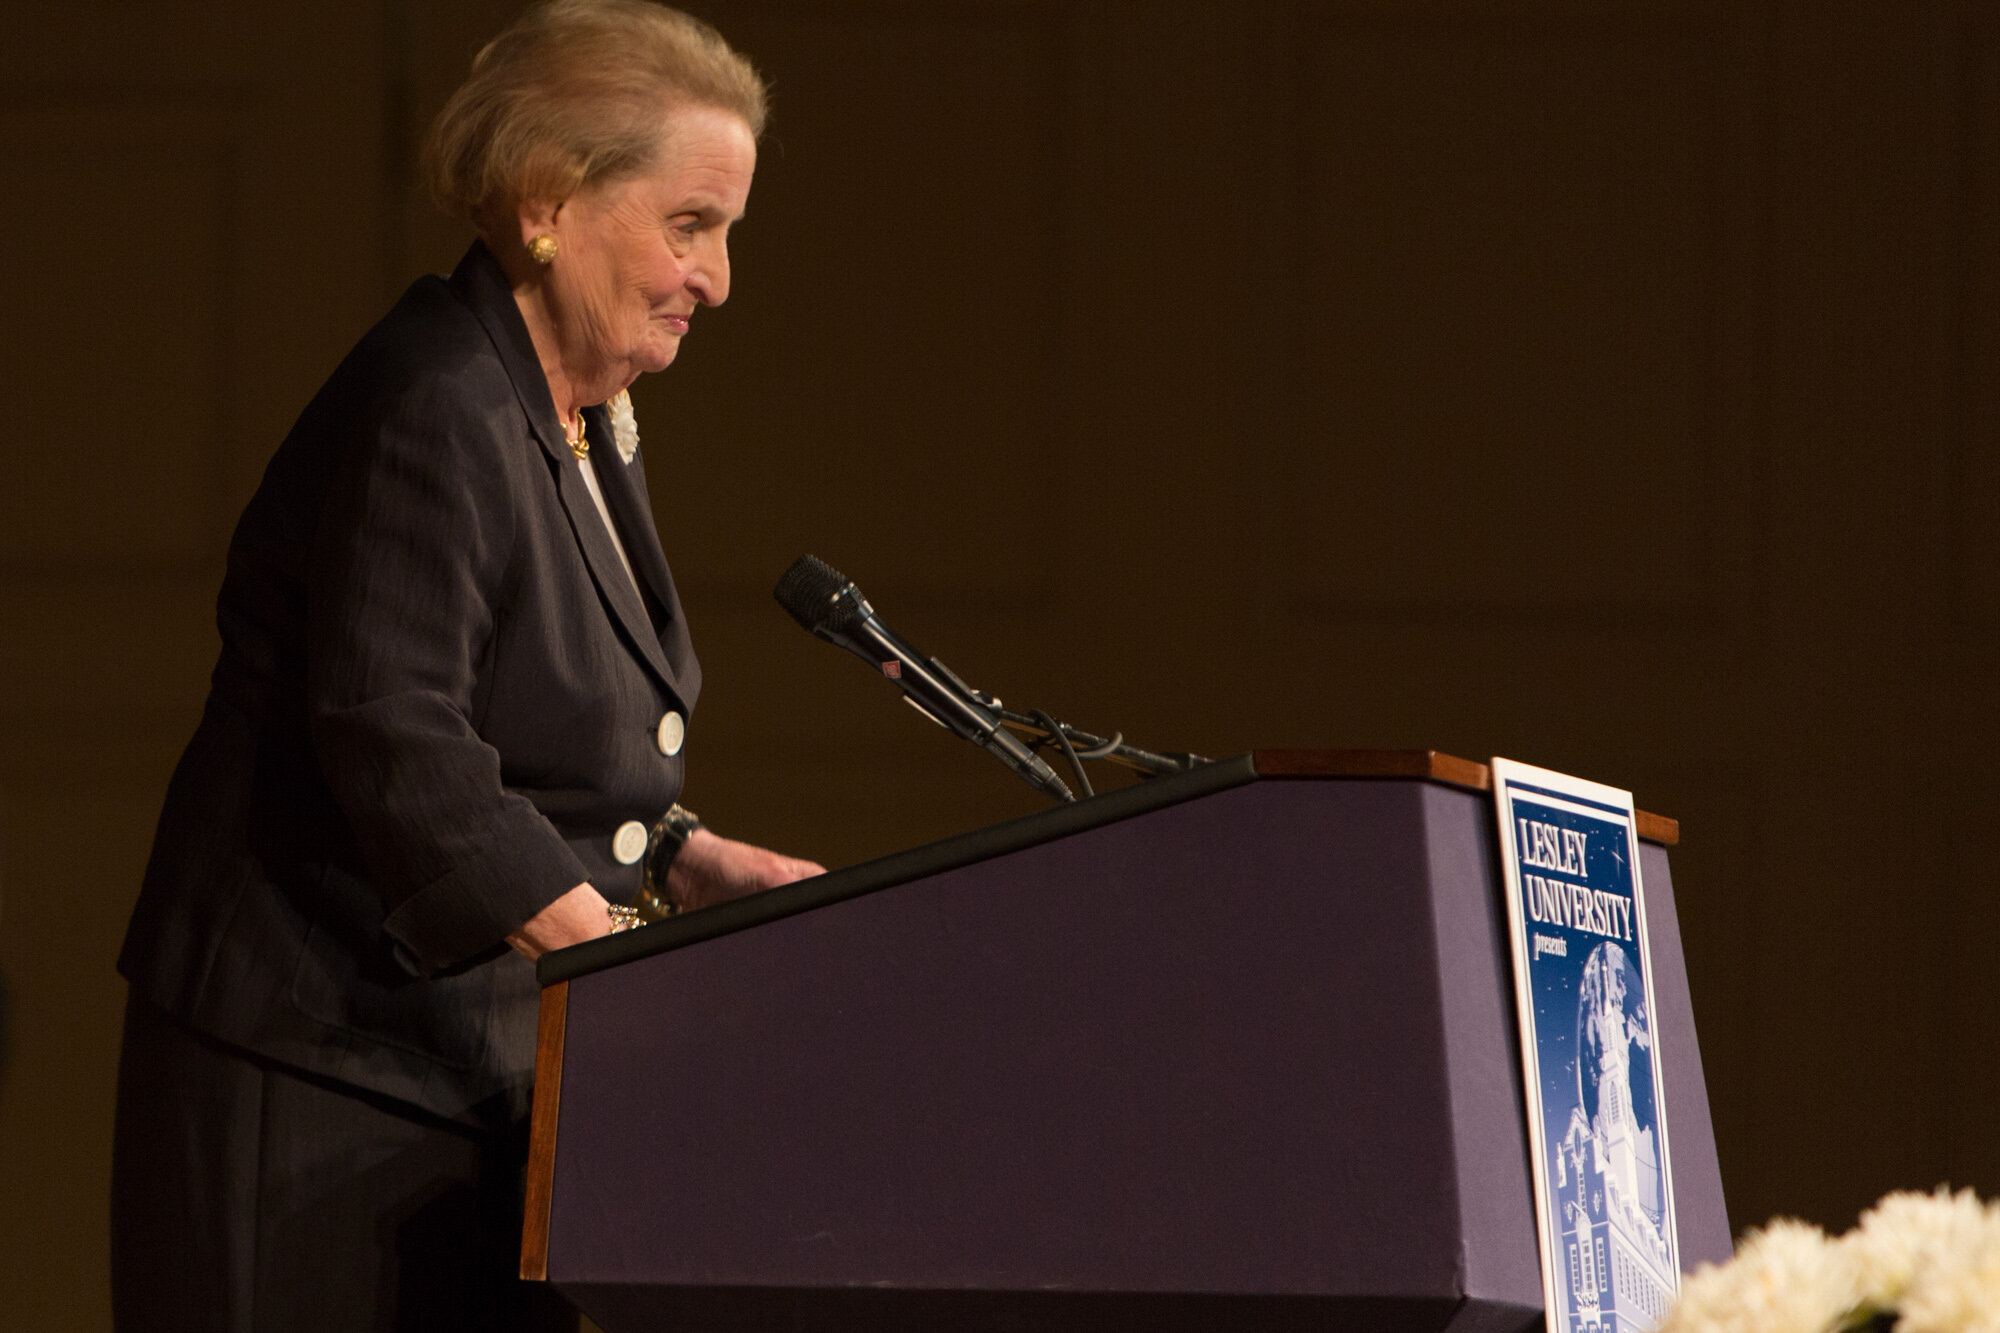 Madeleine Albright.jpg